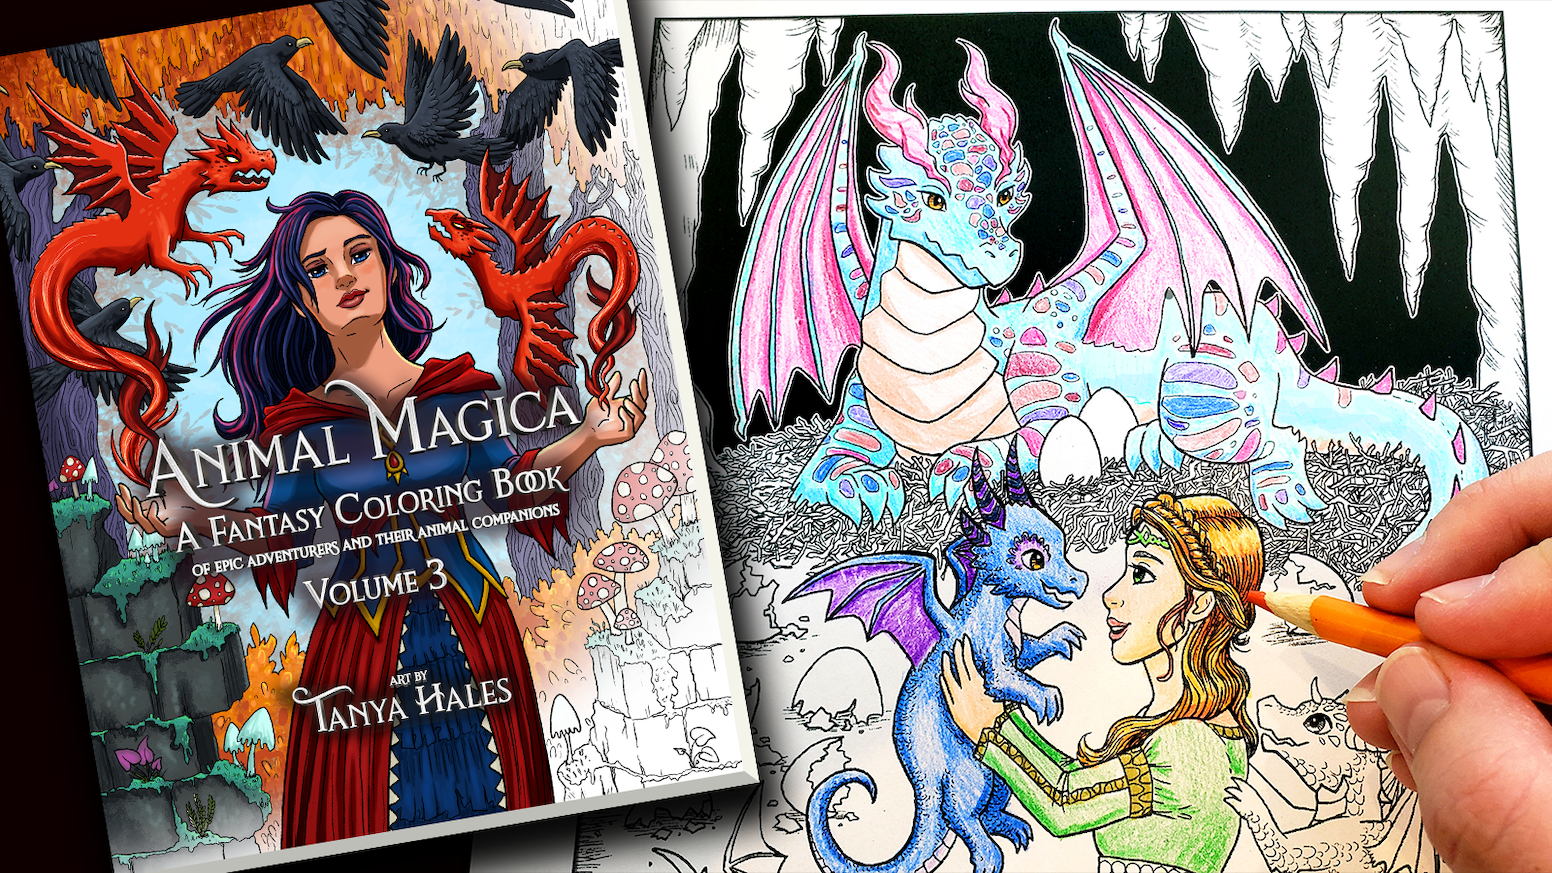 Animal magica an epic fantasy coloring book vol by tanya hales â